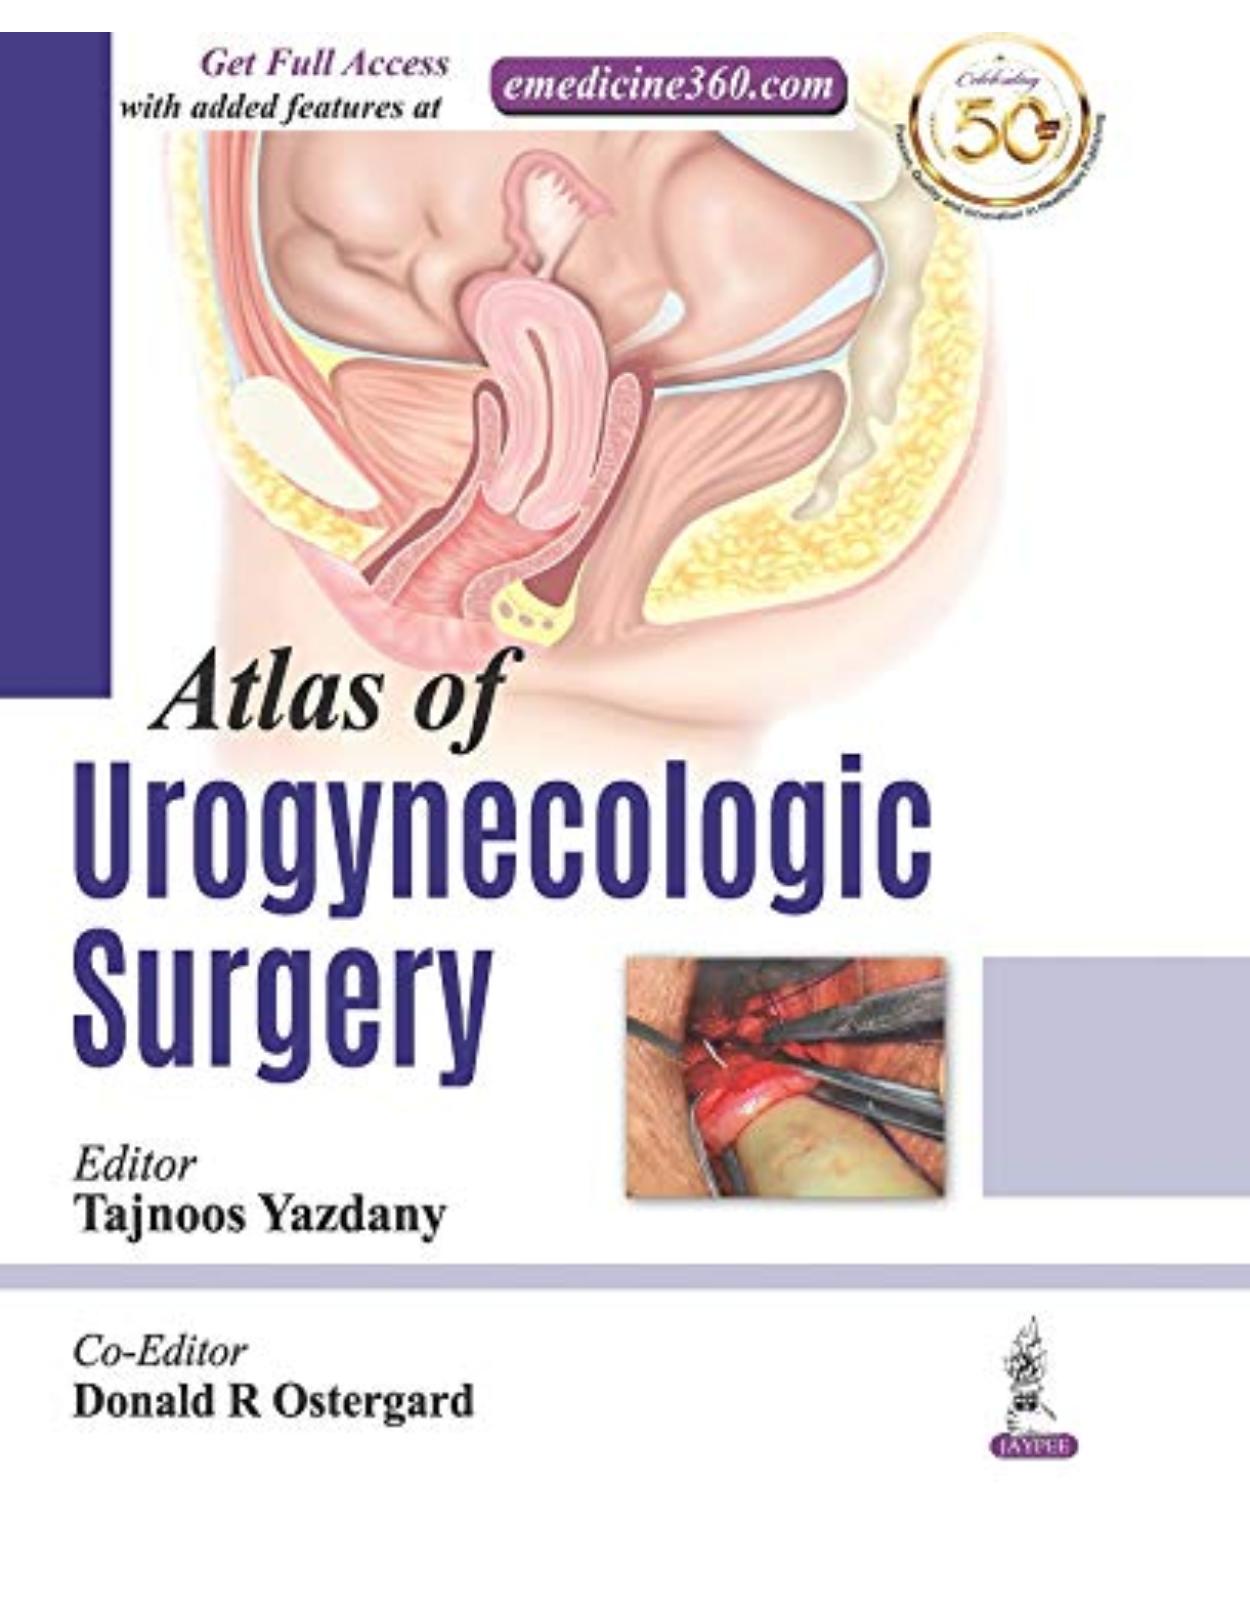 Atlas of Urogynecological Surgery